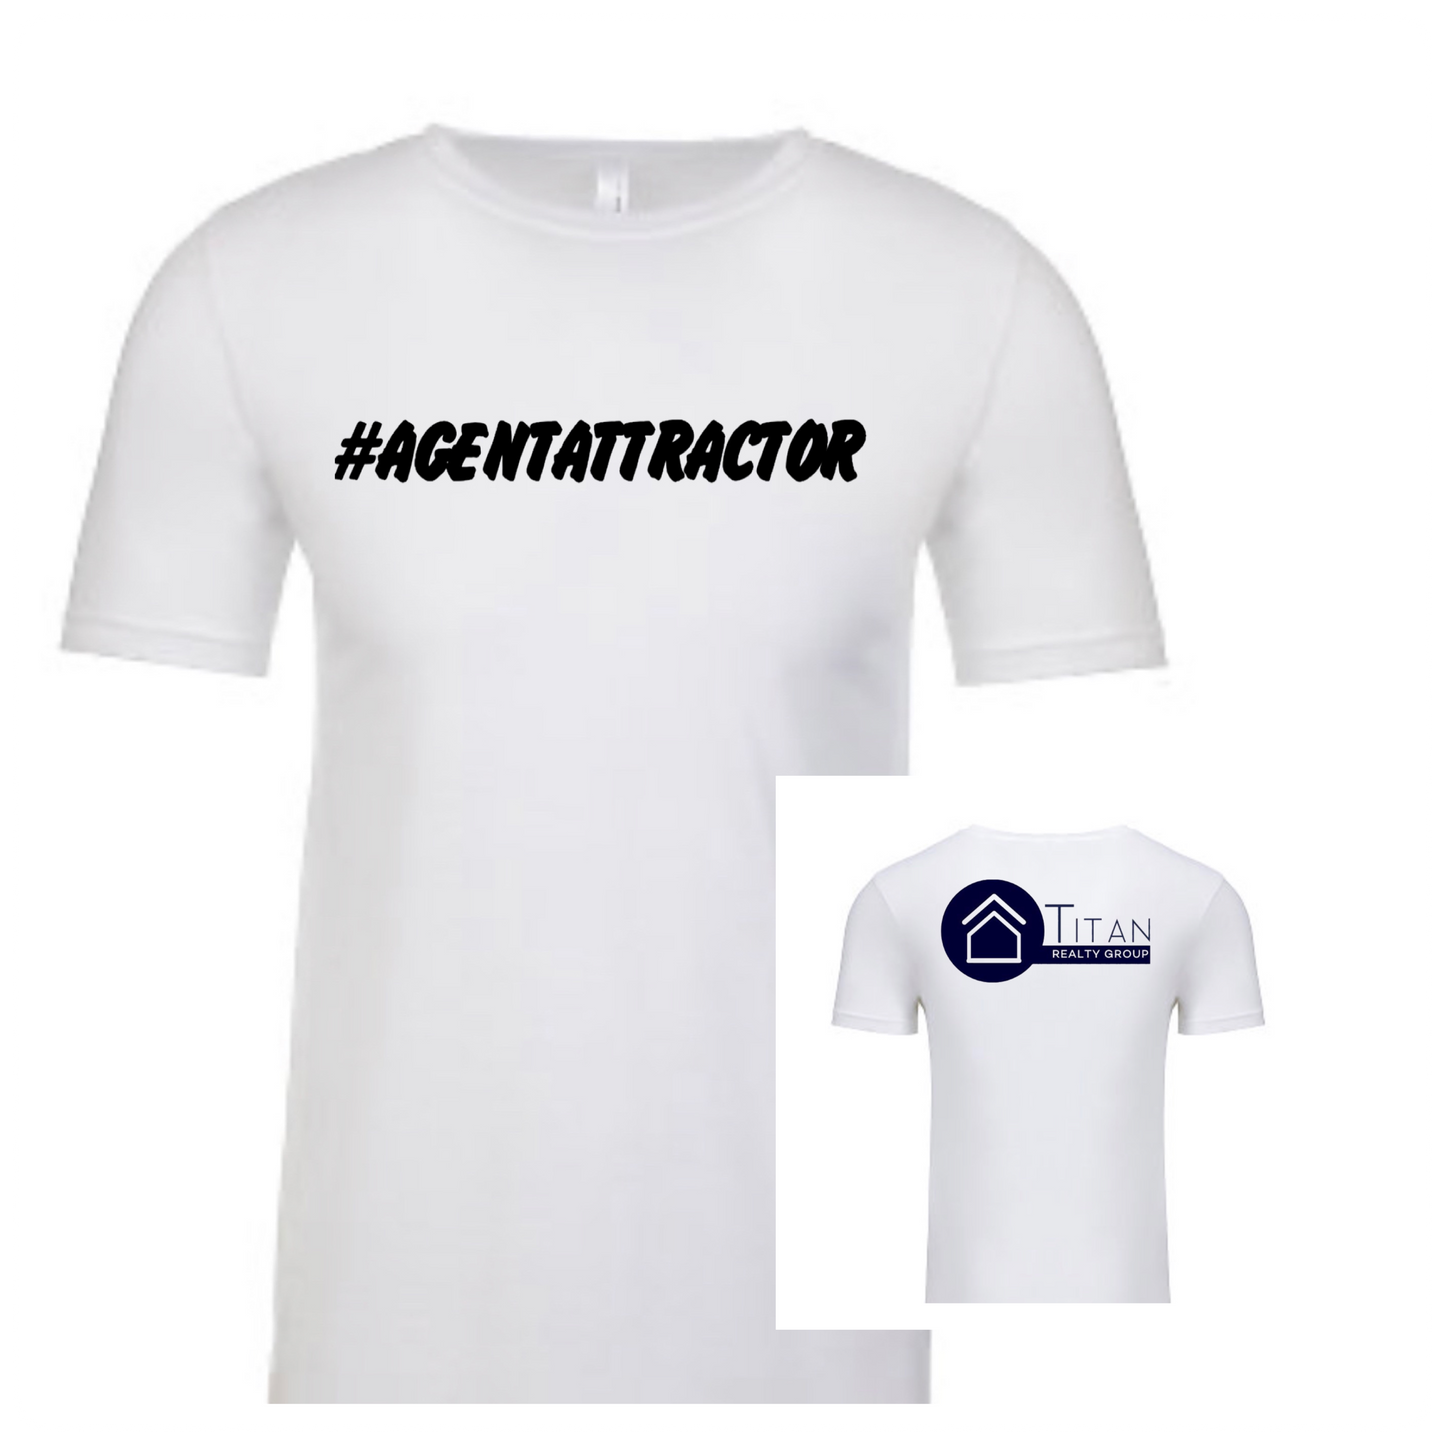 #Agentattractor T-shirt